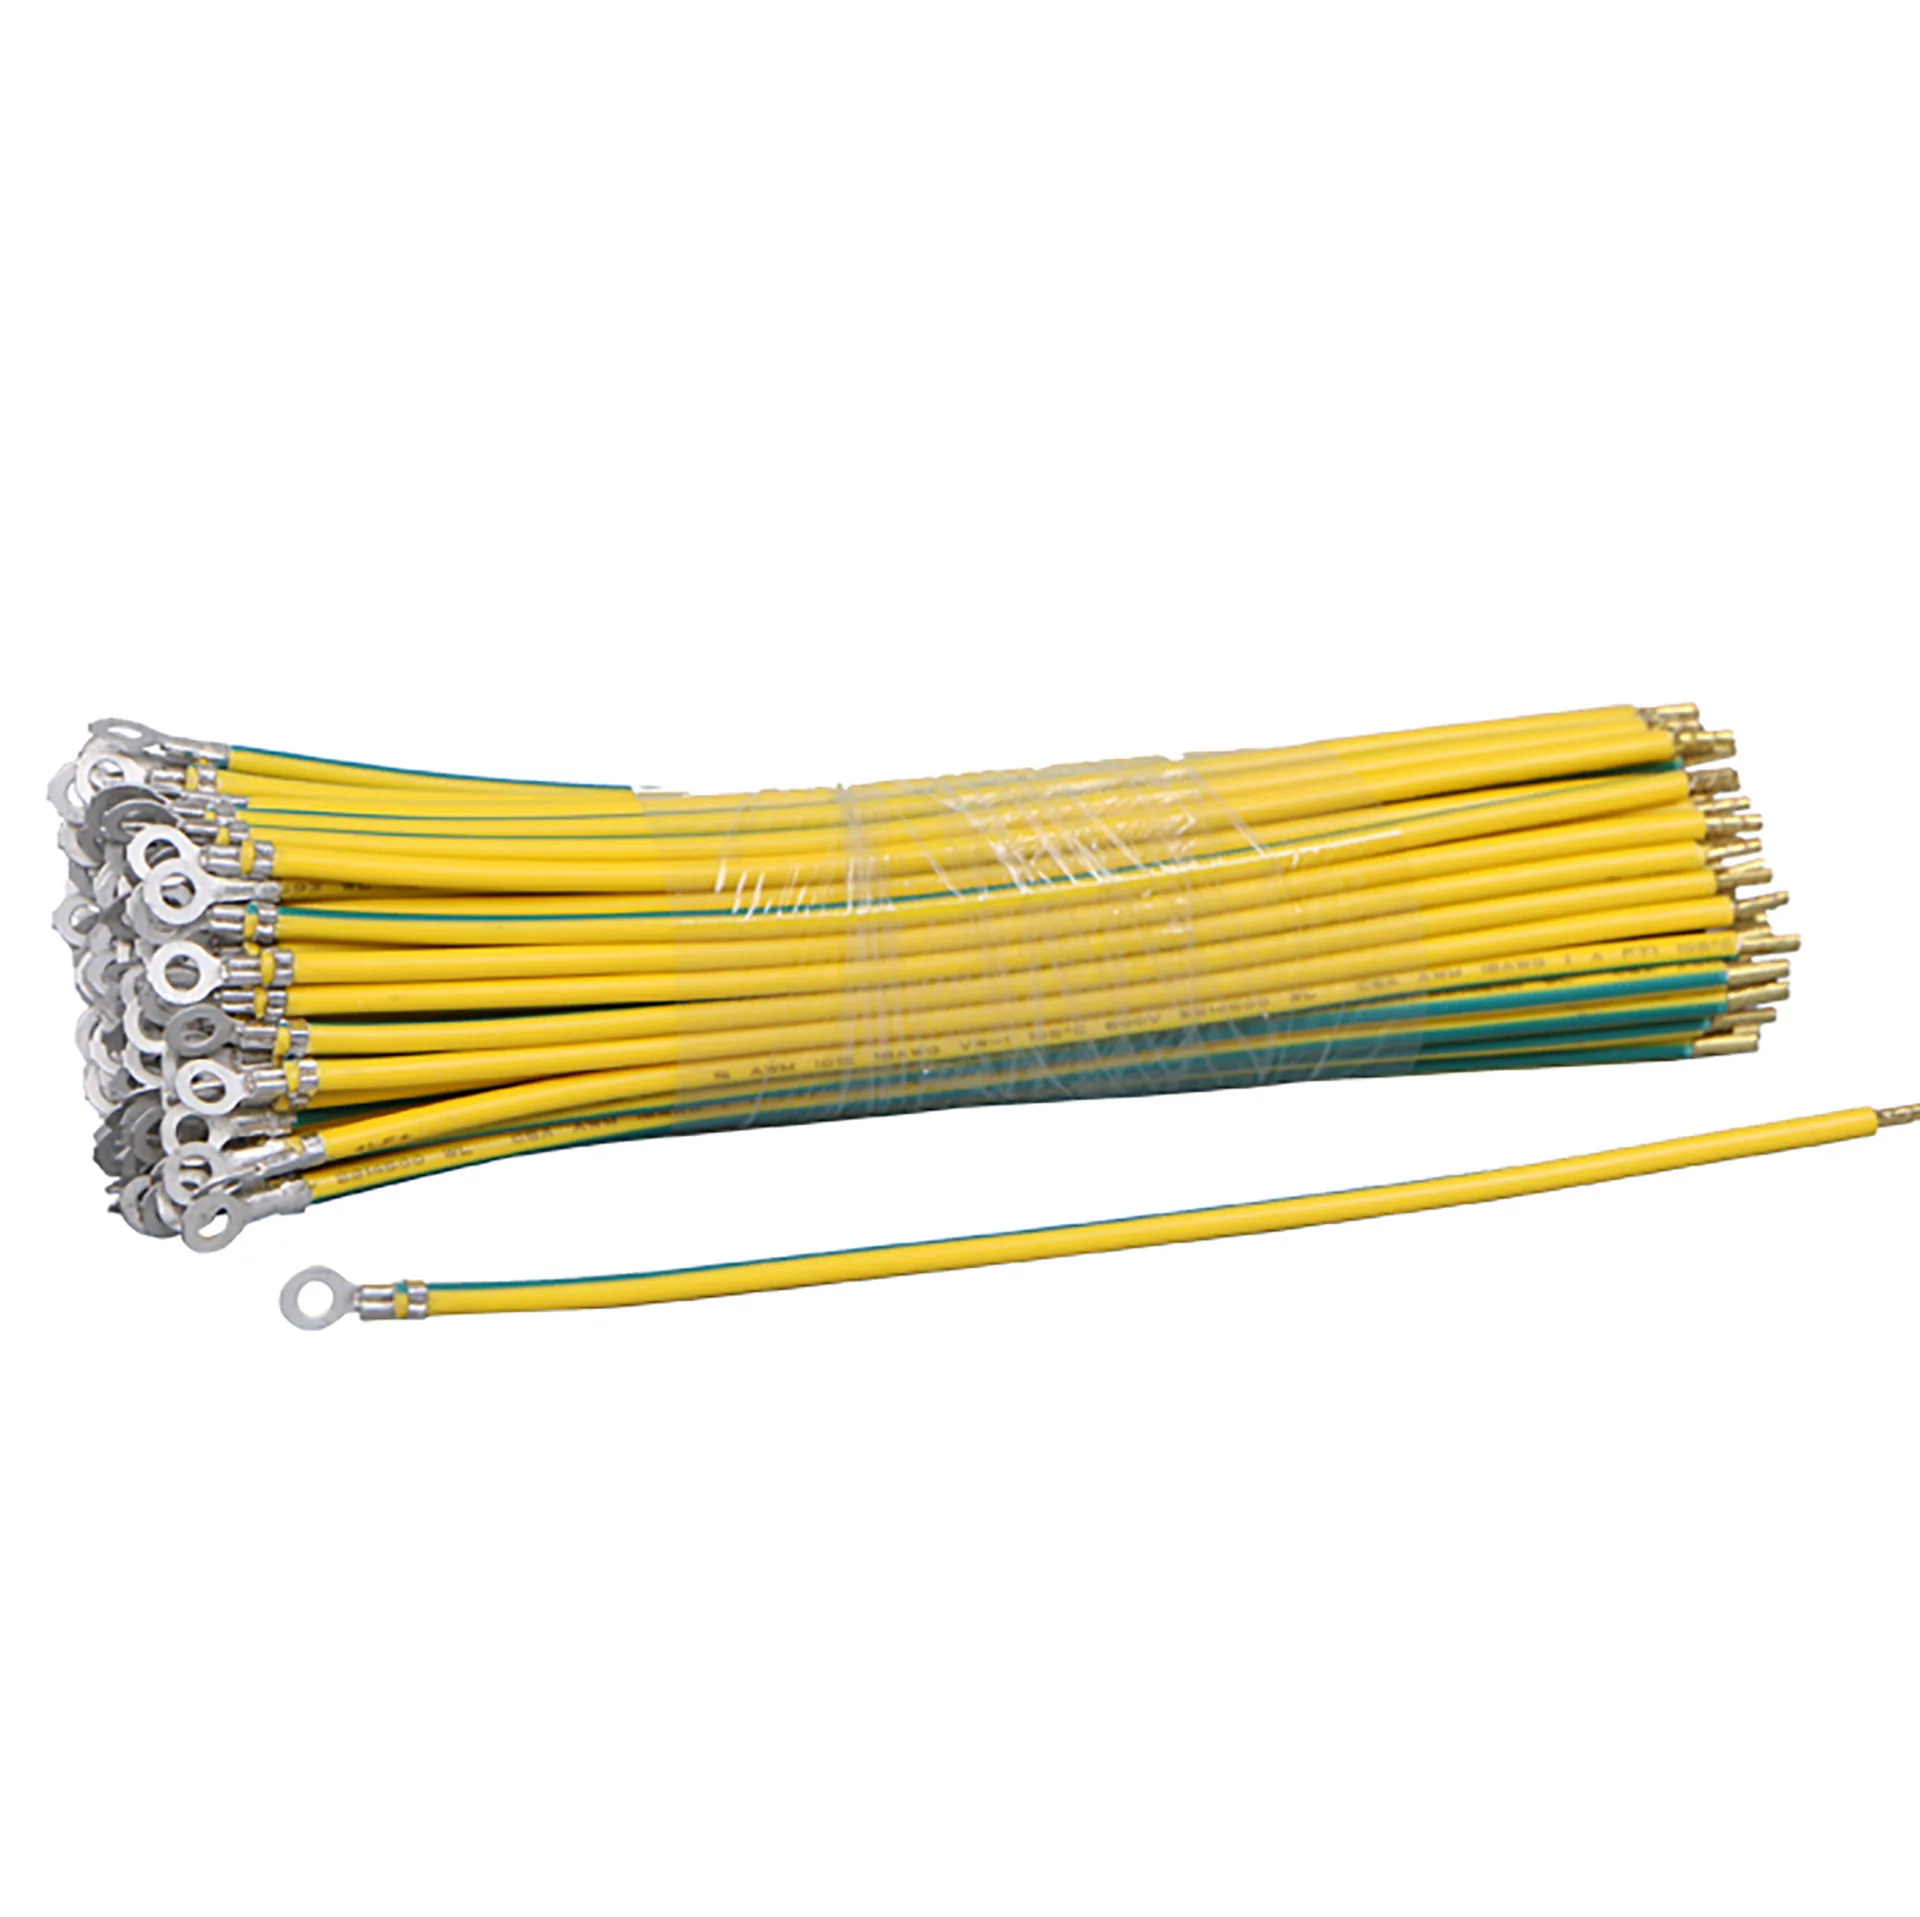 
custom wiring harness 250 faston terminal ring terminal 0.75mm2 yellow/green engine wiring harness  (60360416574)